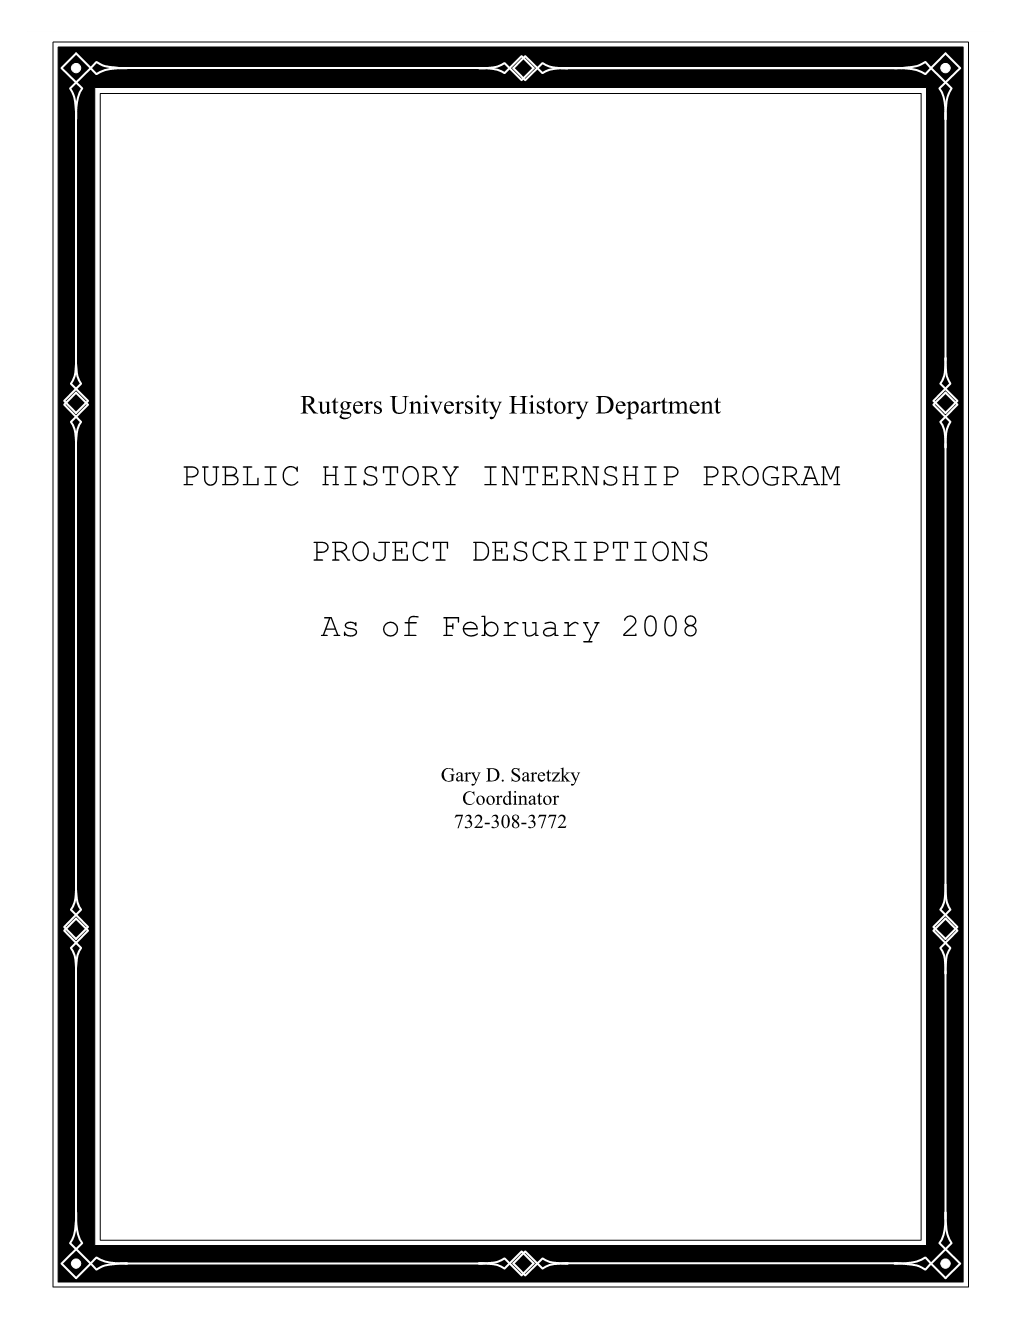 Public History Internship Program Project